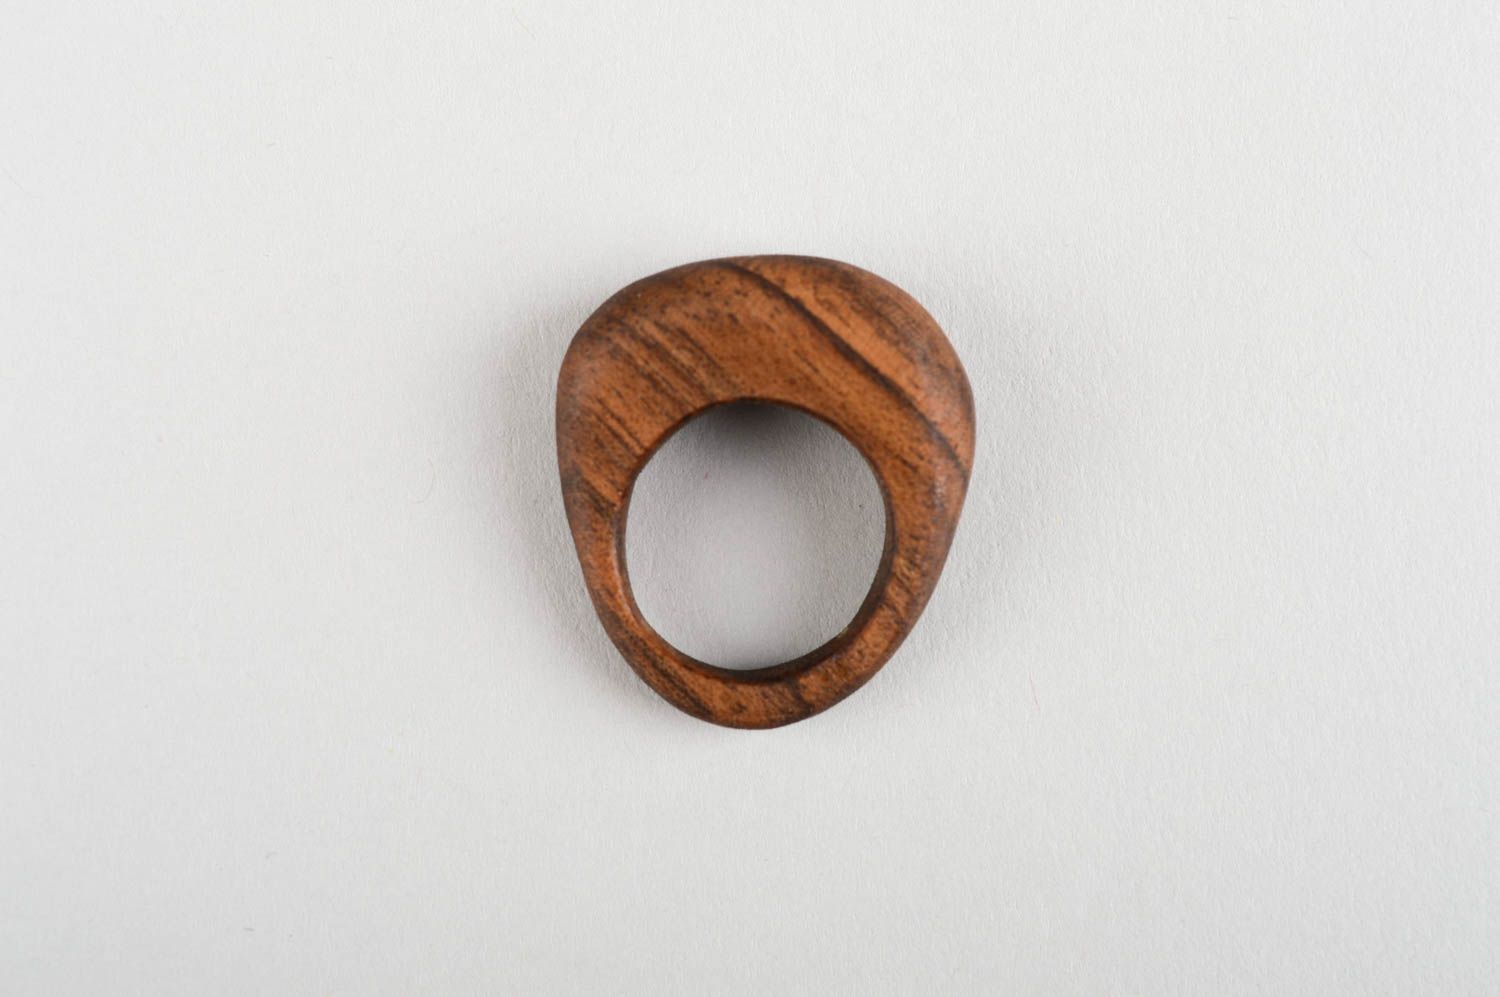 Stylish handmade wooden ring wooden jewelry costume jewelry designs gift ideas photo 2